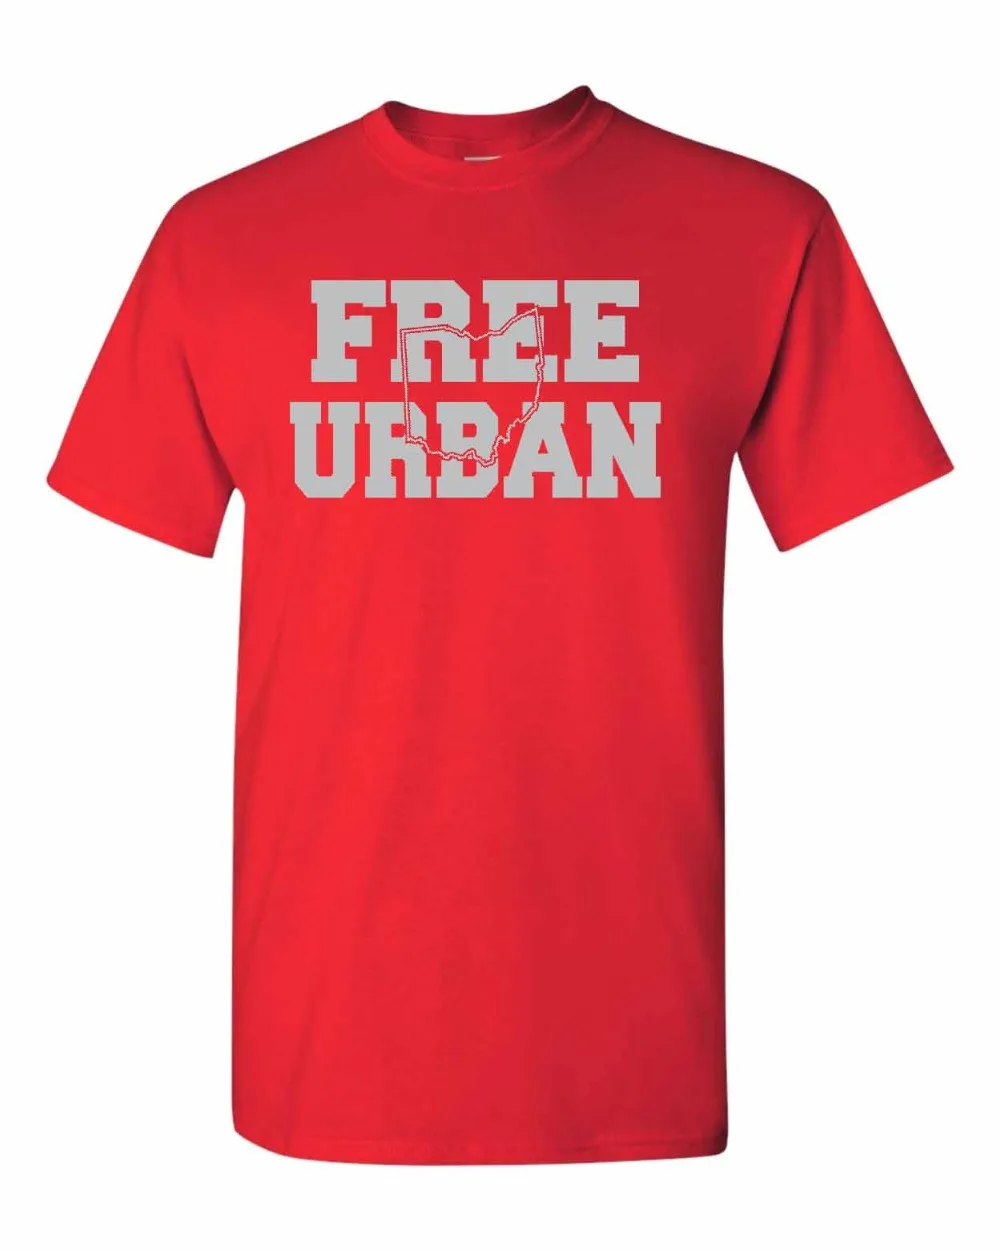 

Free Urban Ohio T Shirt Brand 2019 Male Short Sleeve Cool T-Shirts Designs Best Selling Men Cool T Shirts